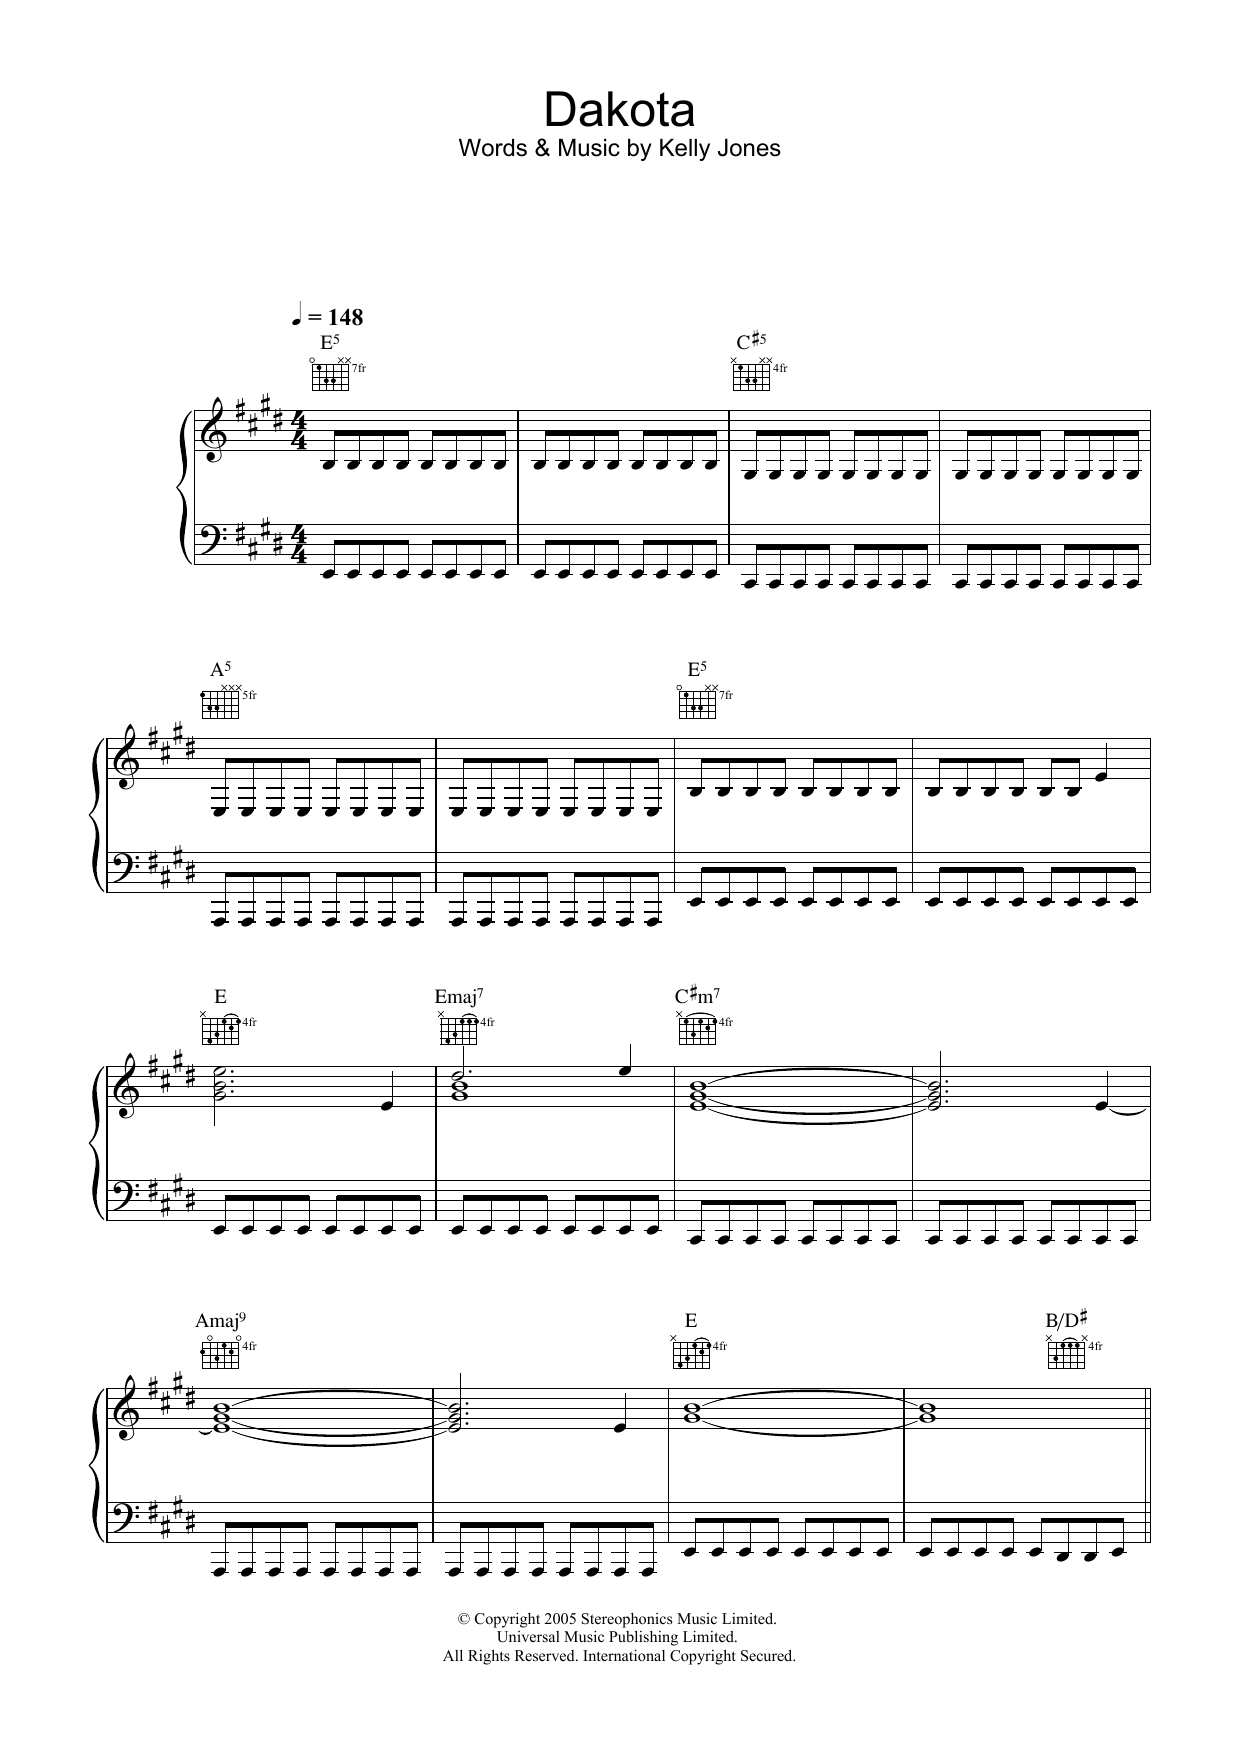 Stereophonics Dakota Sheet Music Notes & Chords for Keyboard - Download or Print PDF